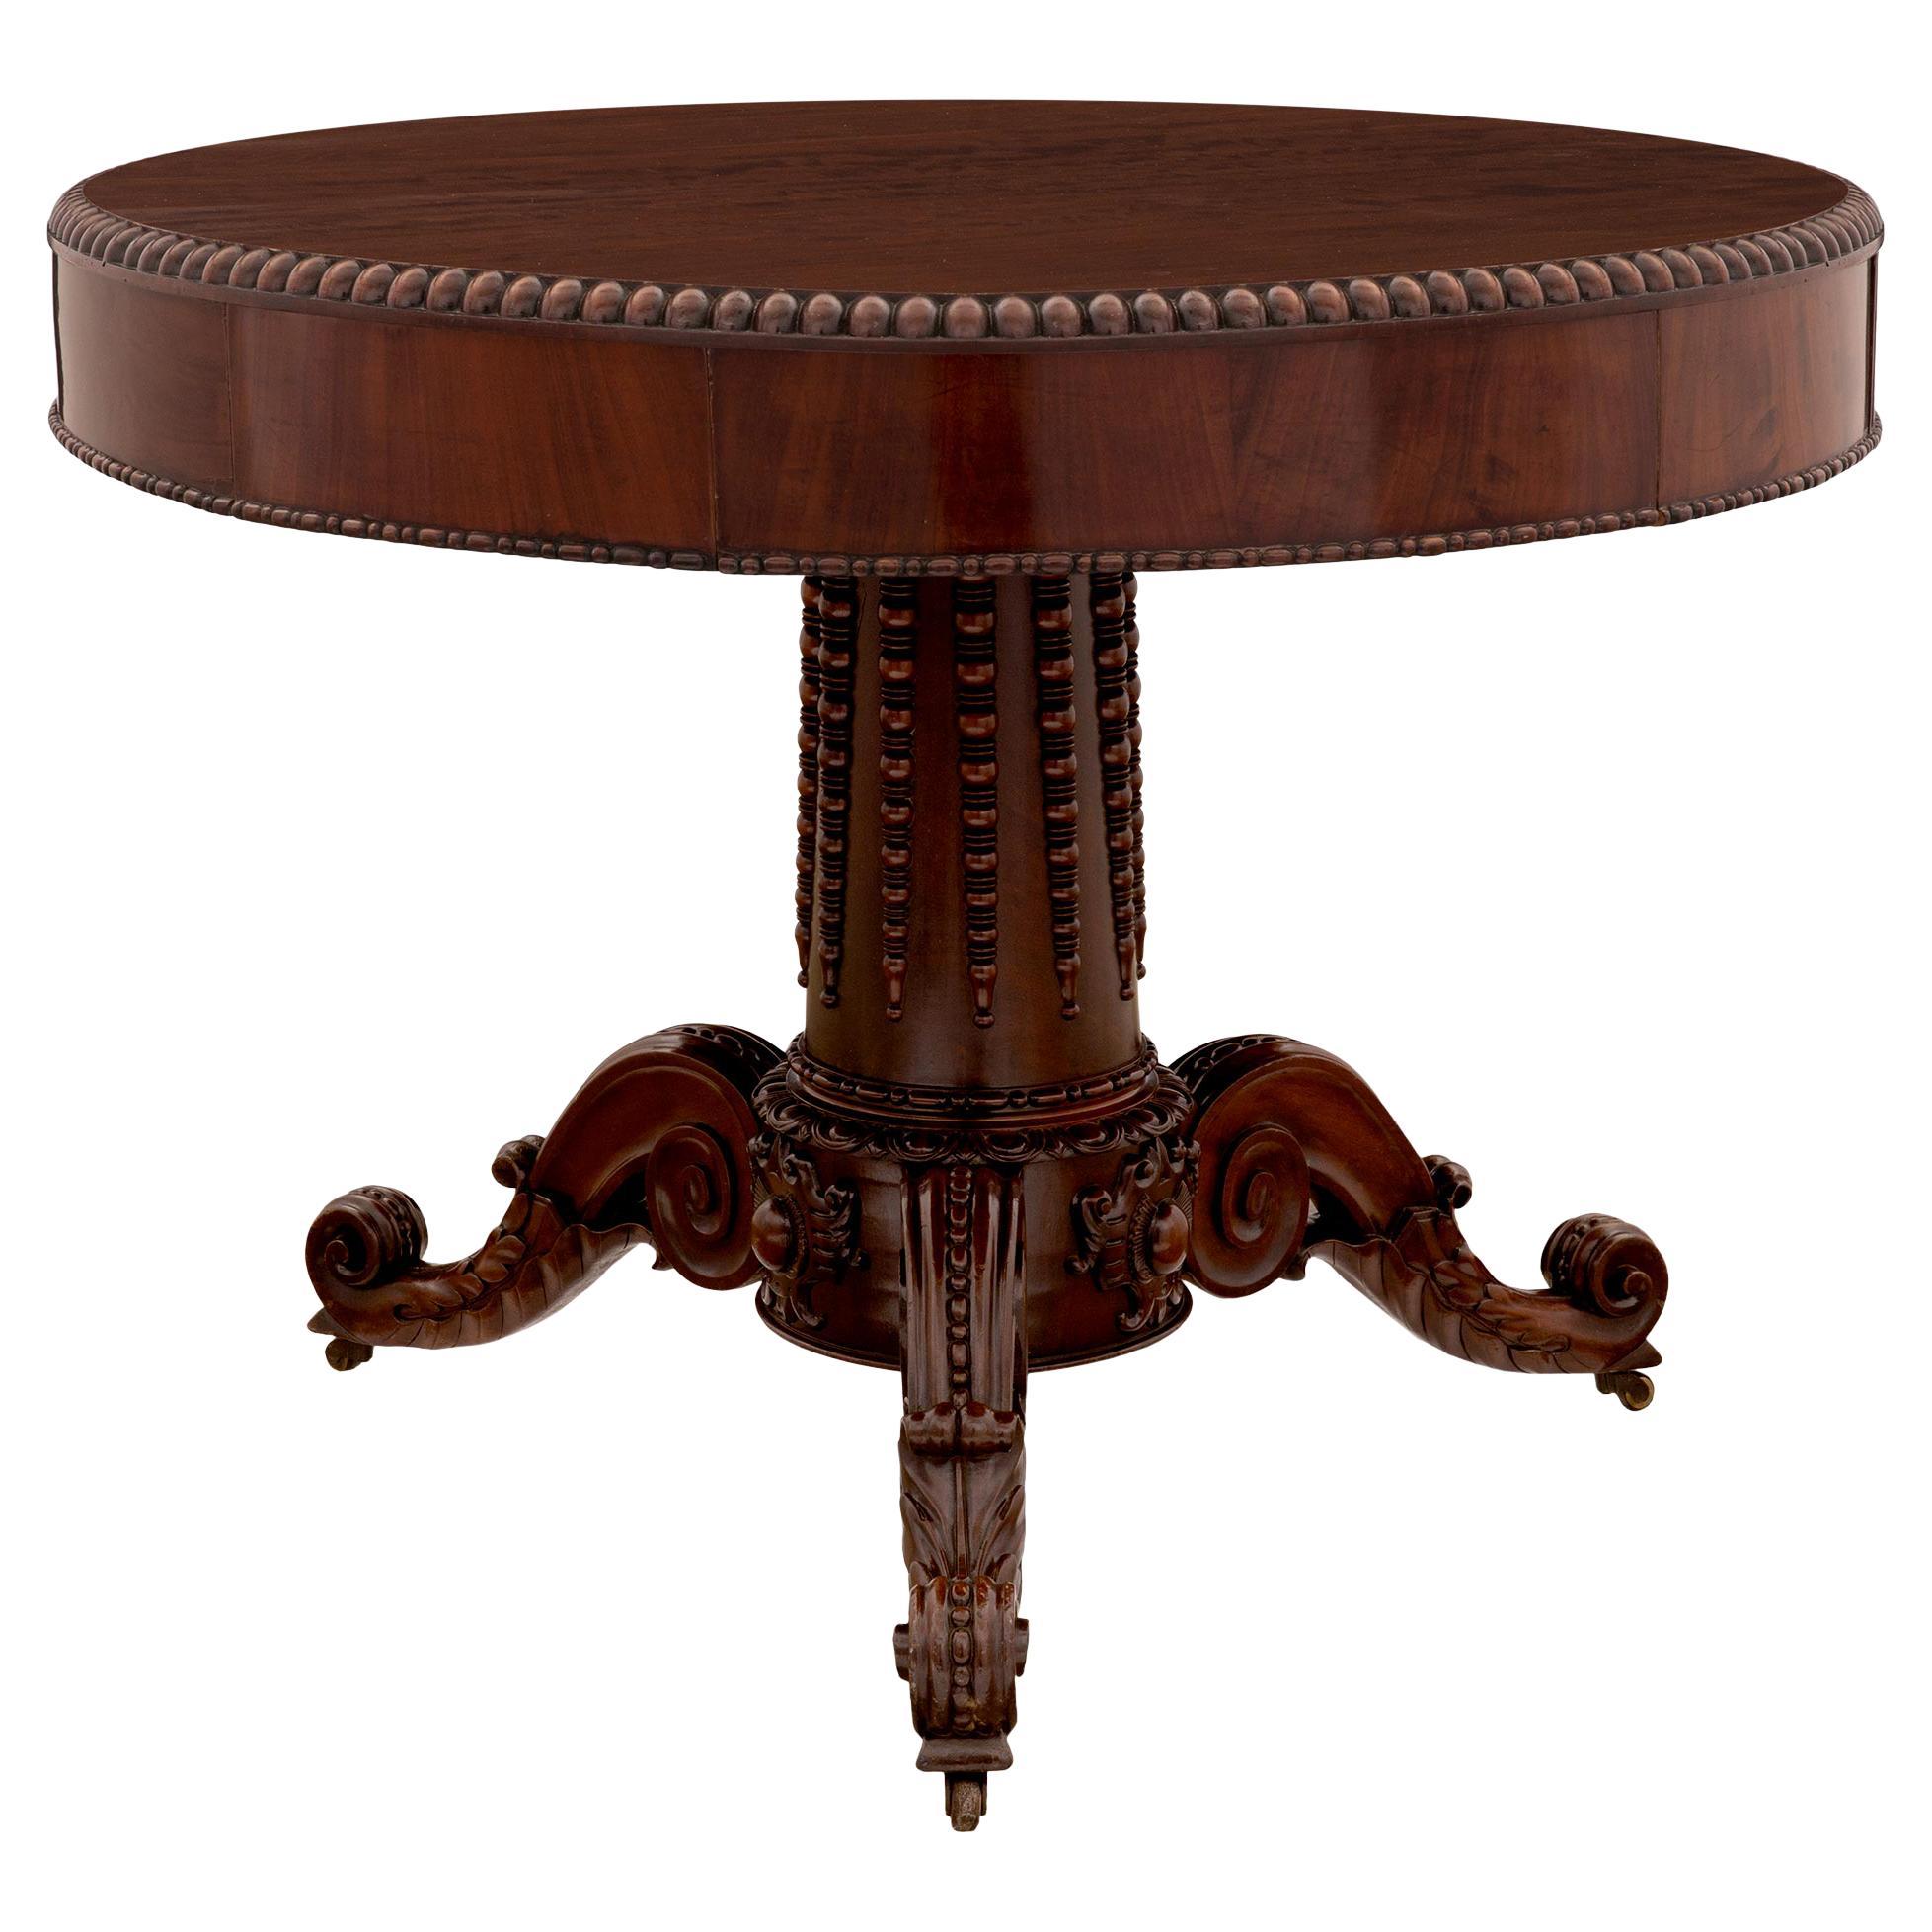 Englischer Regency-Tisch aus geflammtem Mahagoni, 19. Jahrhundert